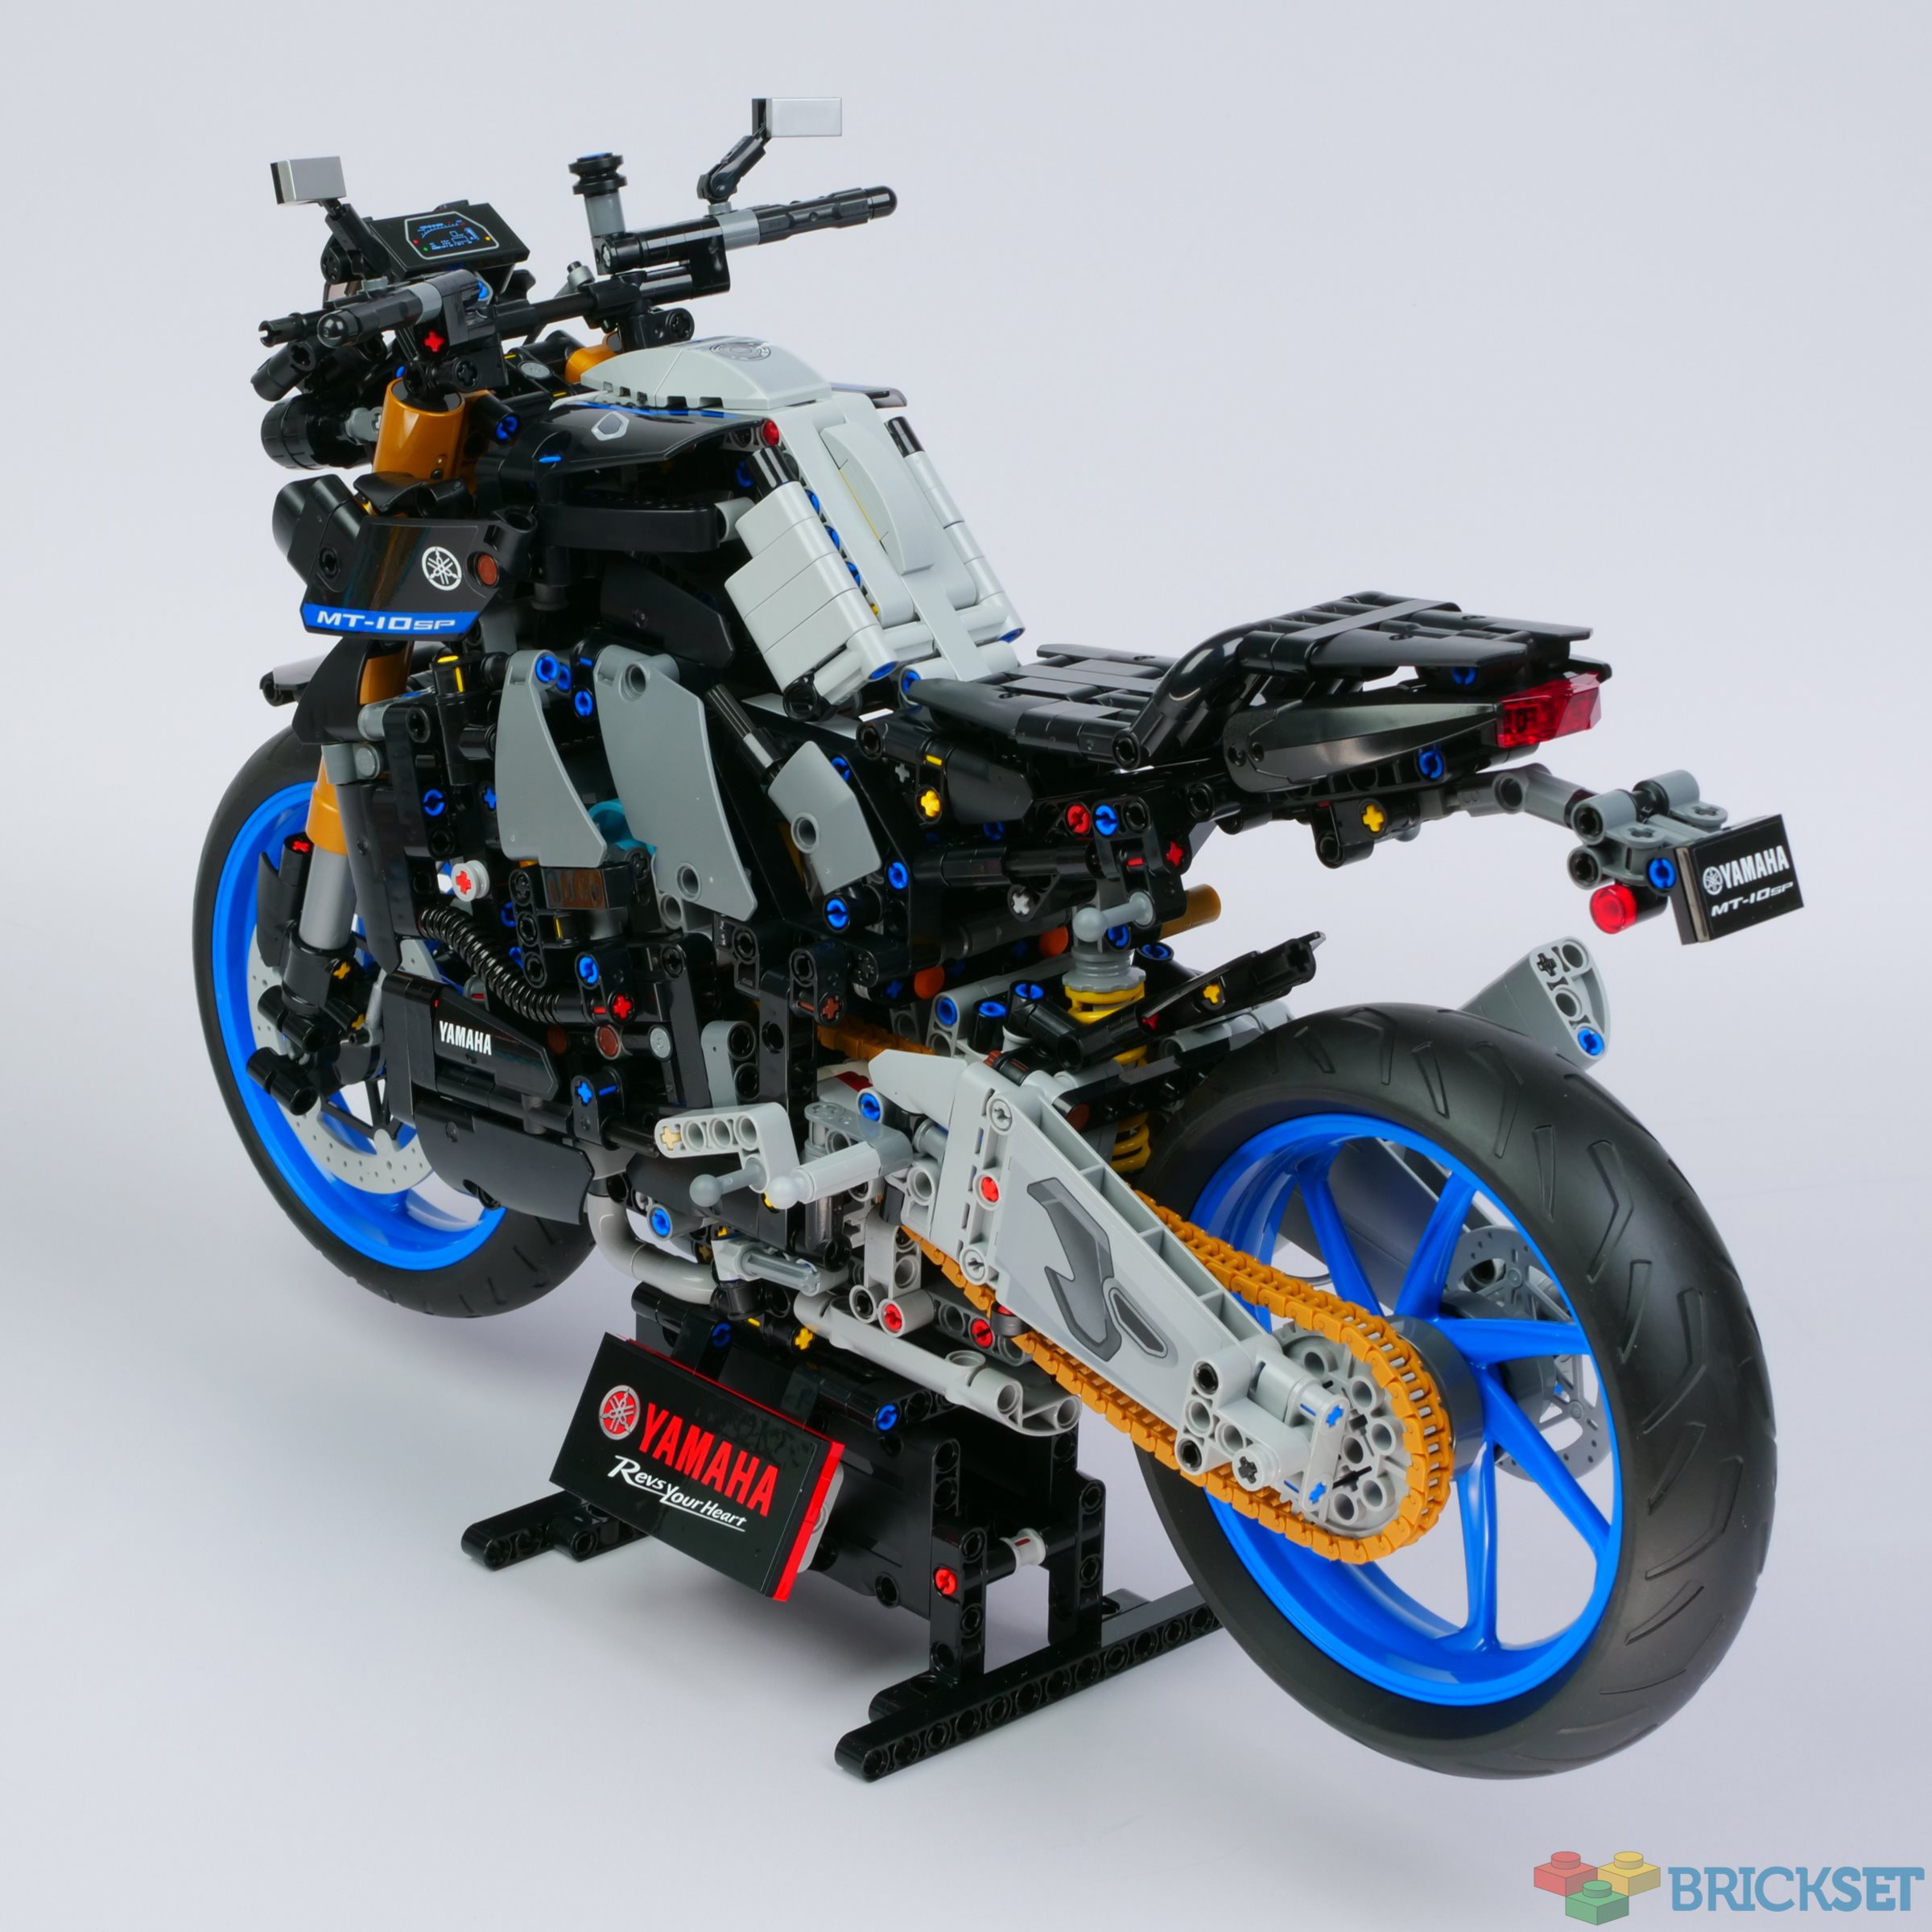 LEGO 42159 Yamaha MT-10 SP review